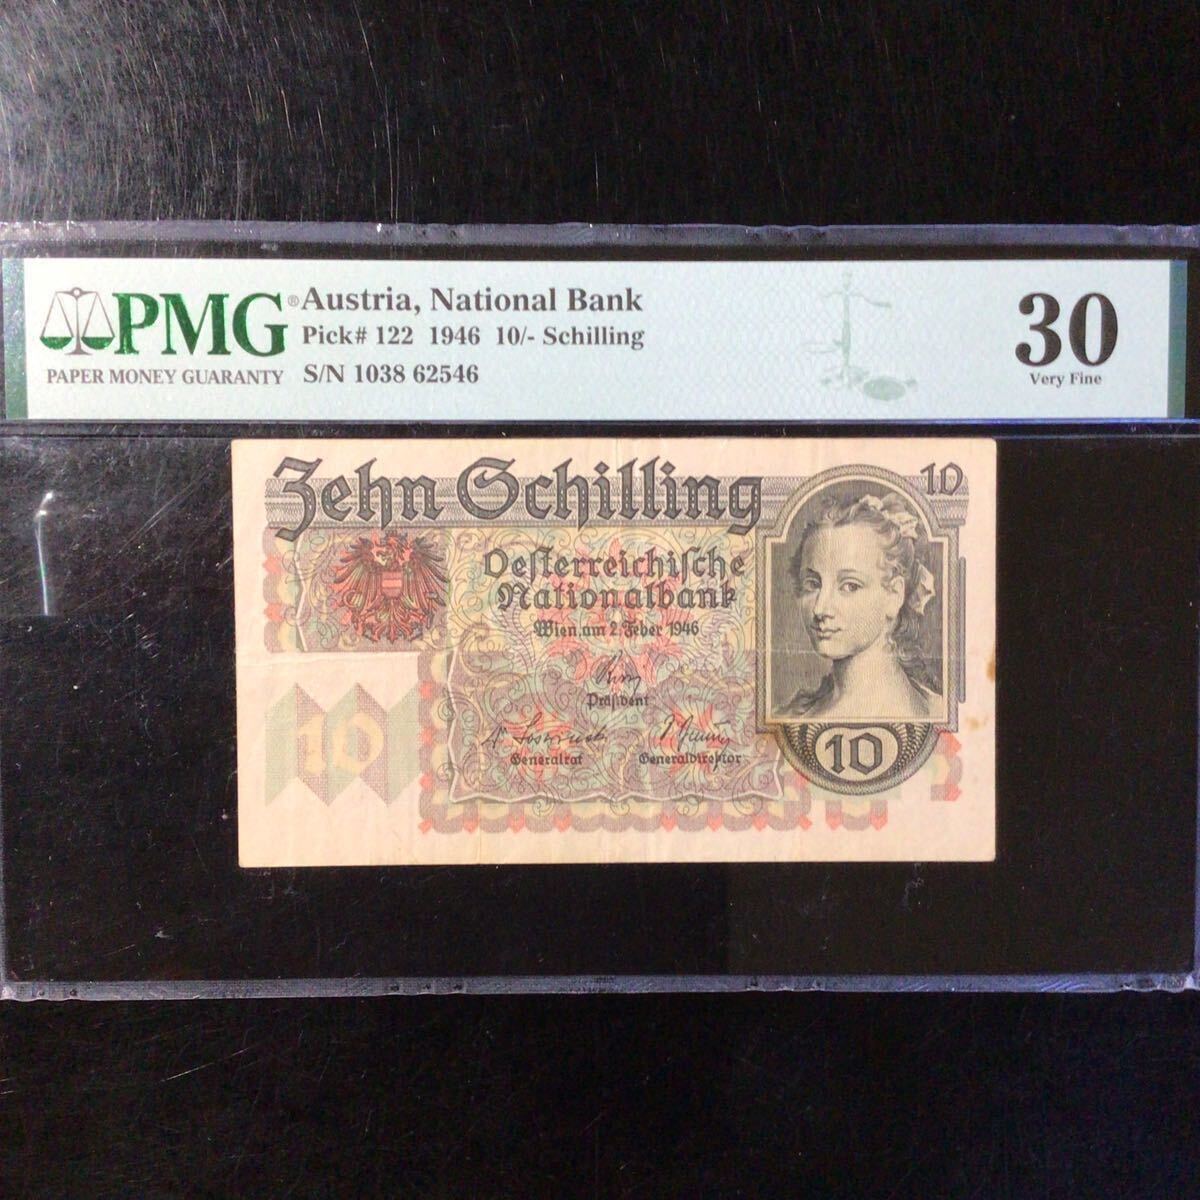 World Banknote Grading AUSTRIA《National Bank》10 Schilling【1946】『PMG Grading Very Fine 30』_画像1